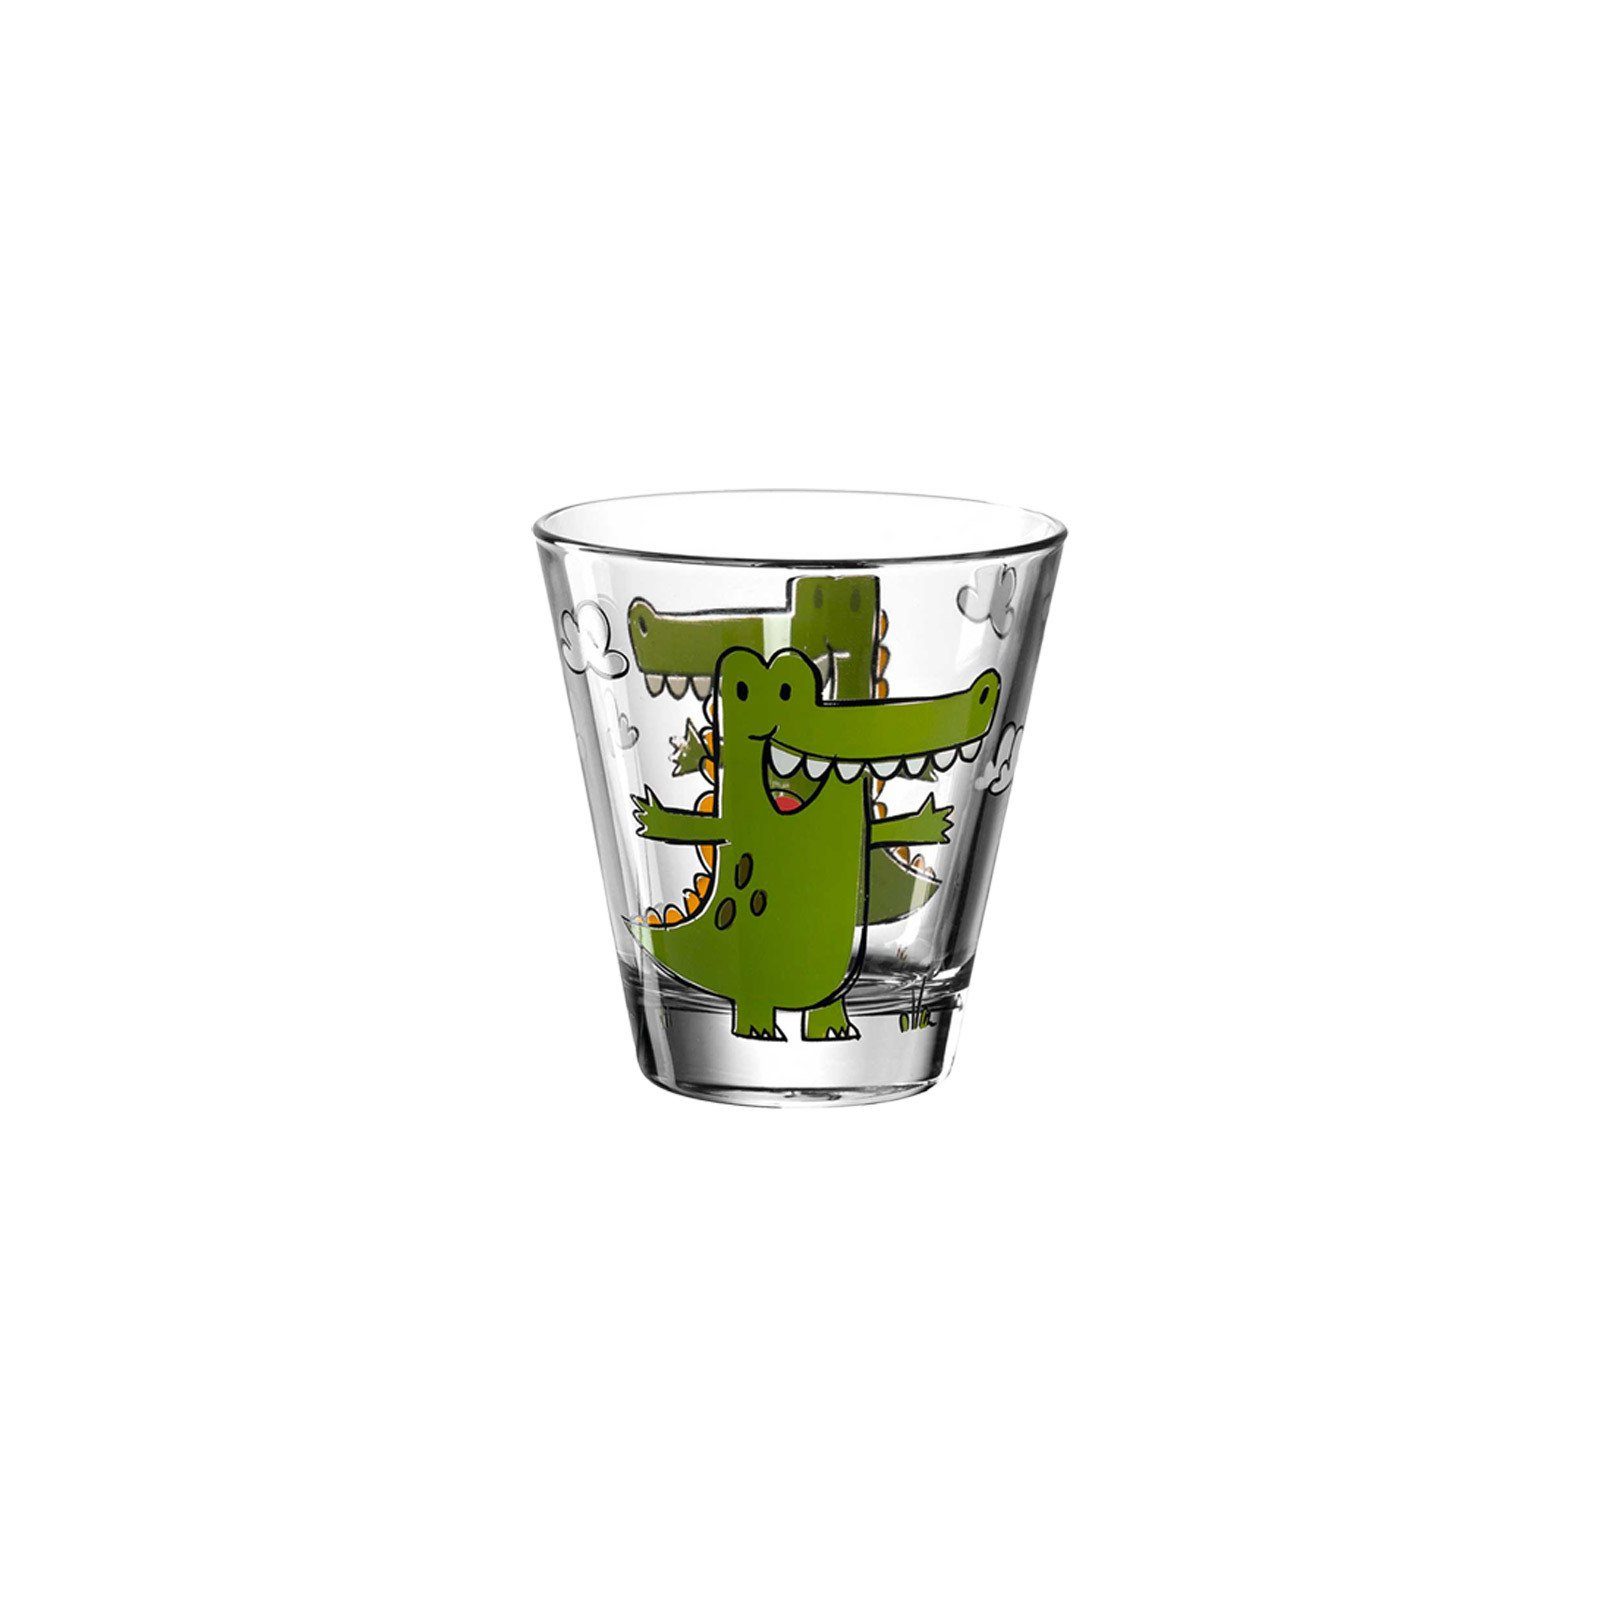 Kinderbecher 2er Kindertasse Krokodil Glas Trinkglas und LEONARDO Bambini Set,